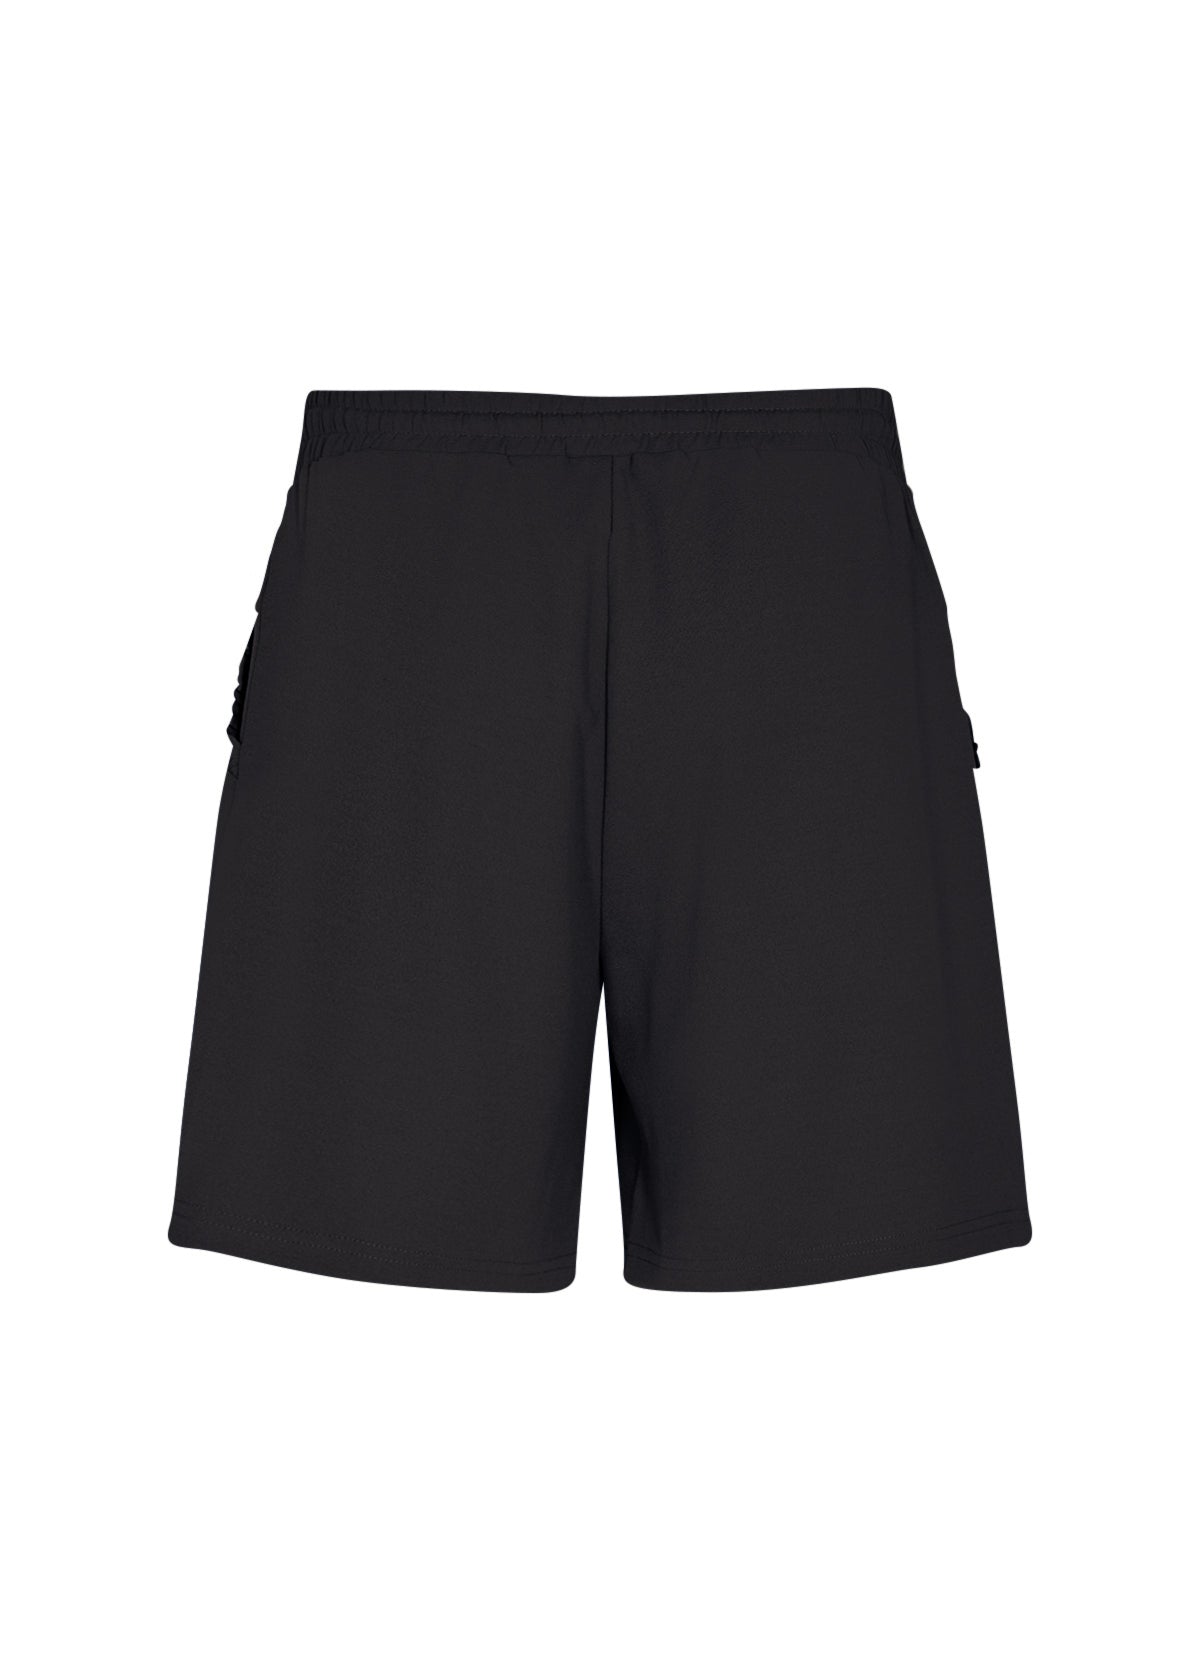 Soya Concept - Black Drawstring Shorts